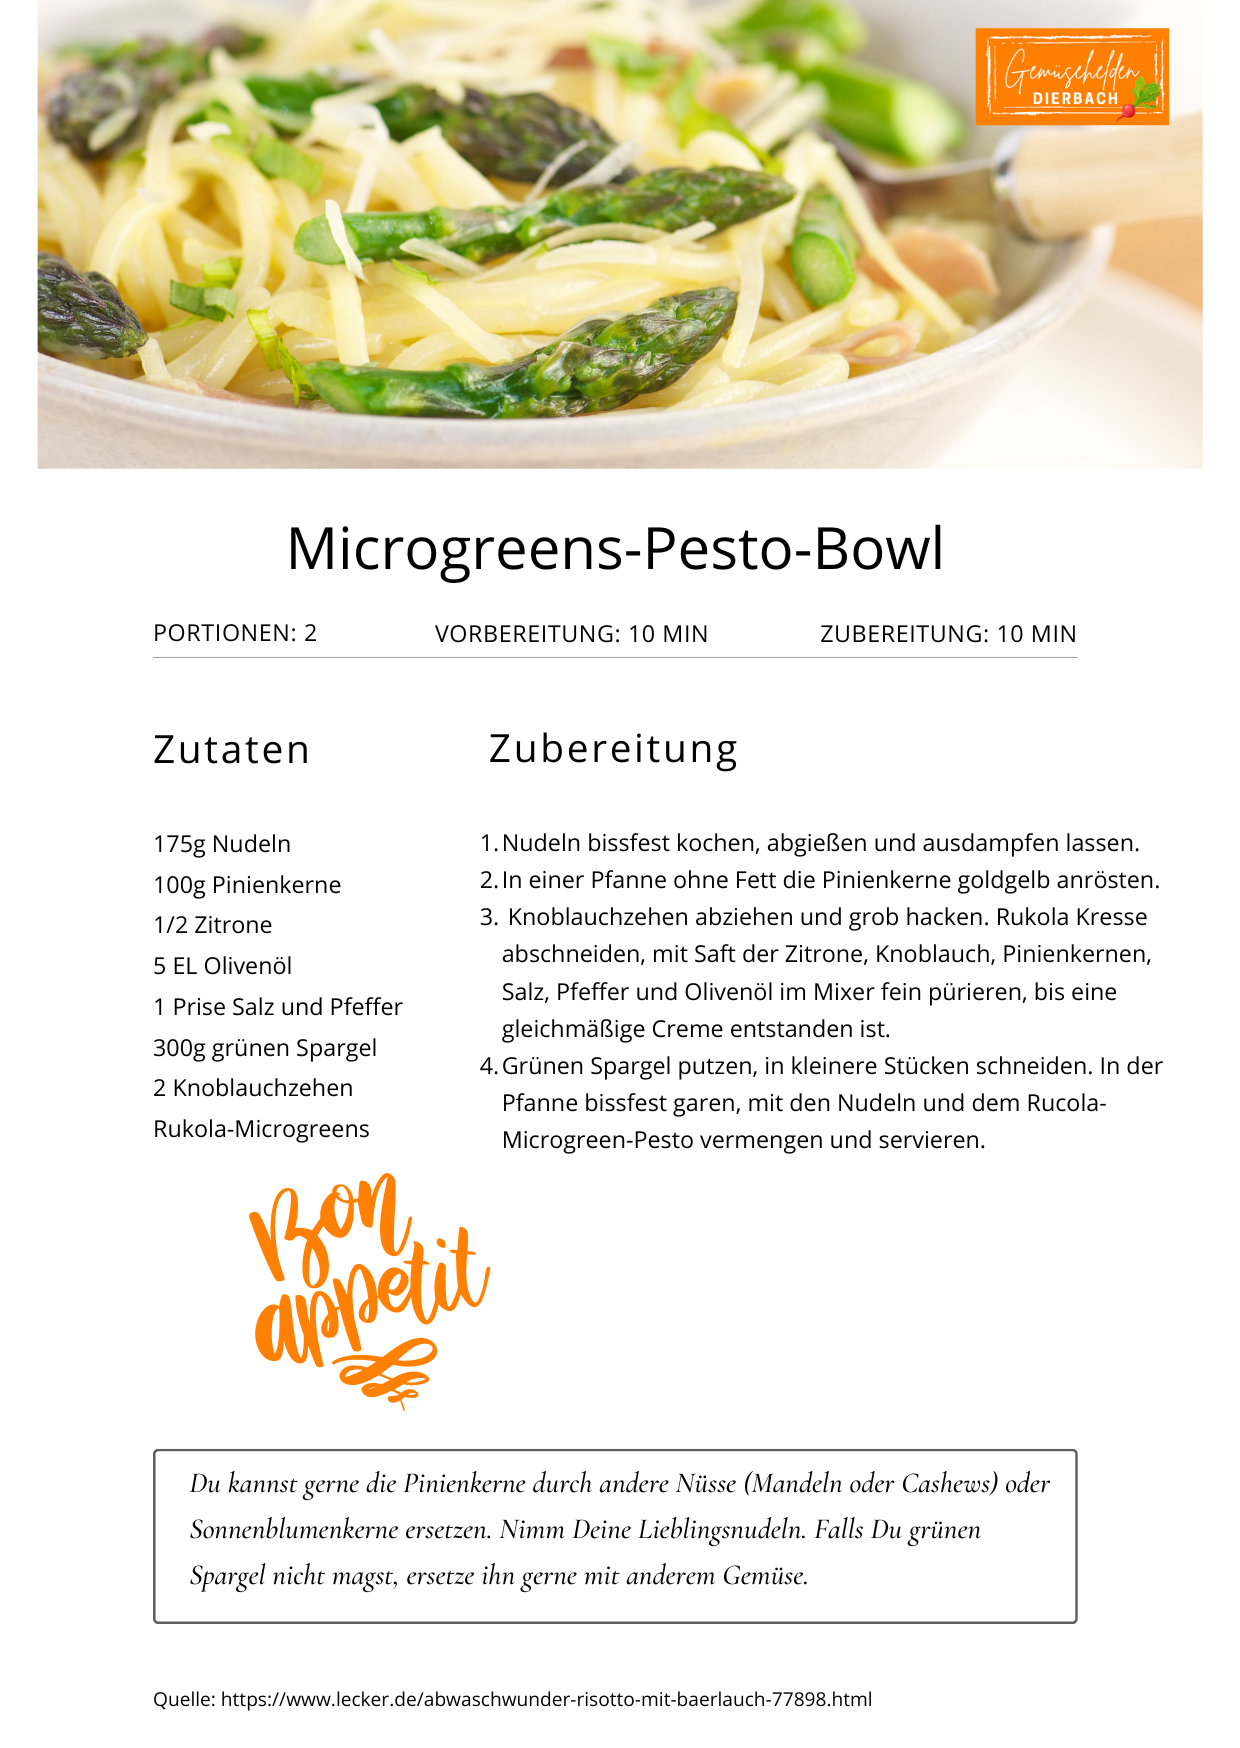 Microgreen-Pesto Bowl mit grünem Sparel